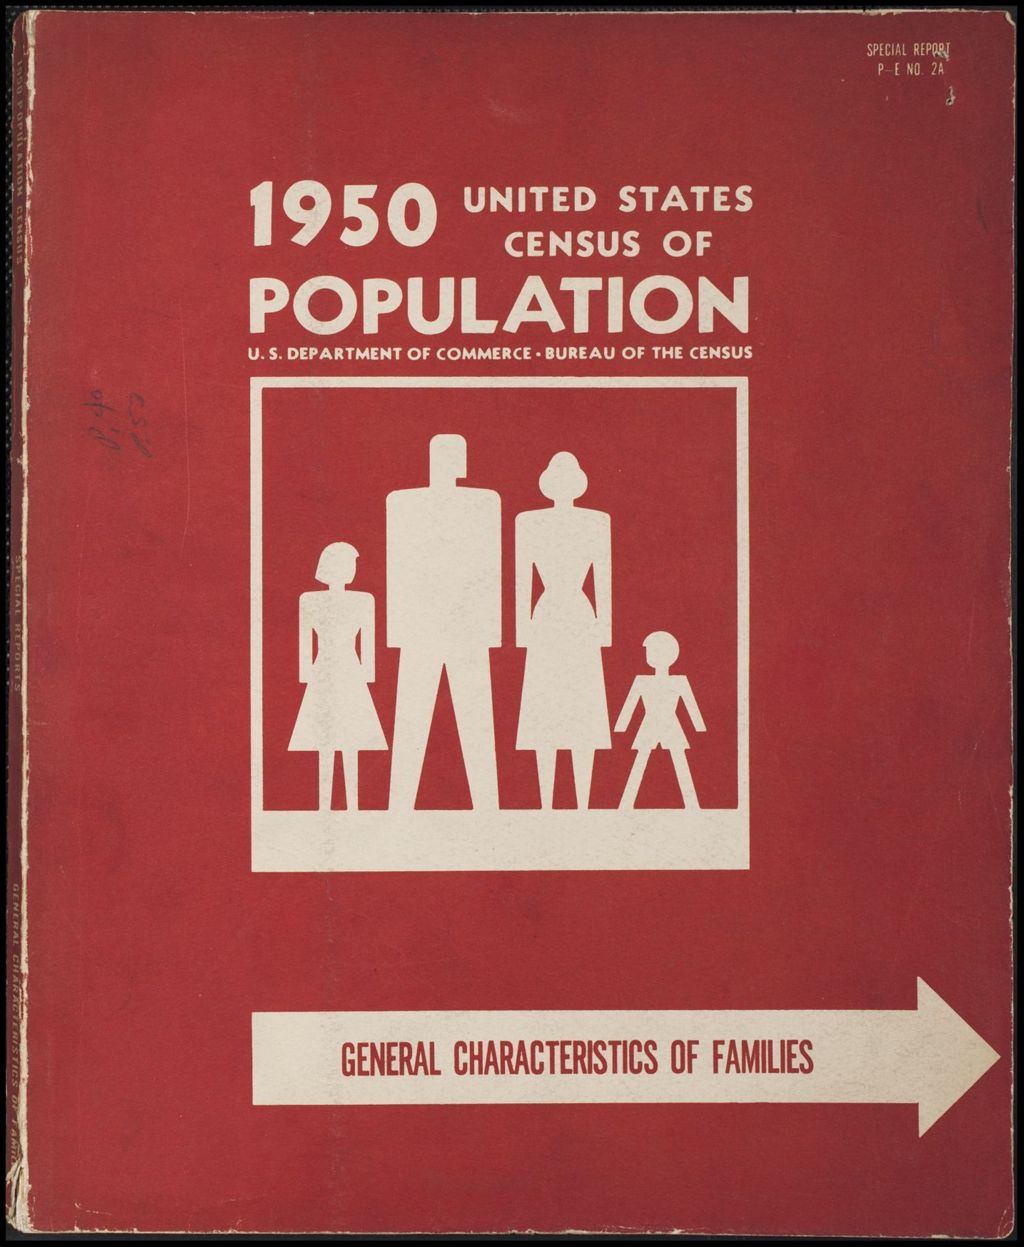 Housing Statistics Tables, 1950 (Folder III-271)